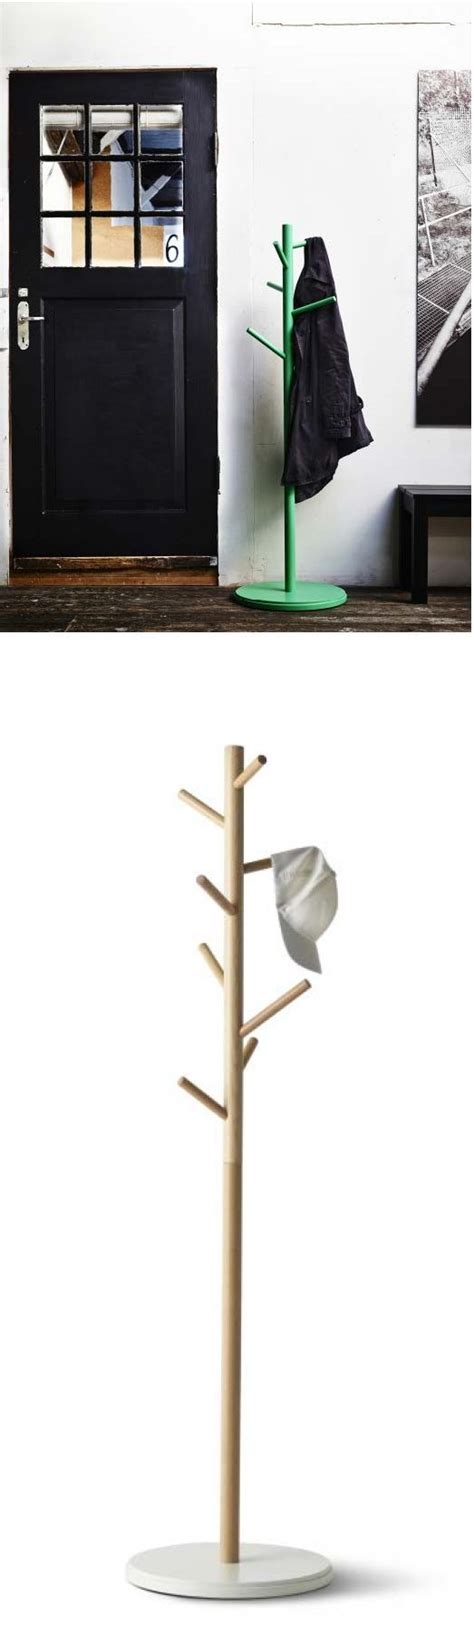 20+ Coat Rack Stand IKEA – Home Decor and Garden Ideas | Ikea room ideas, Ikea ps 2014, Coat stands